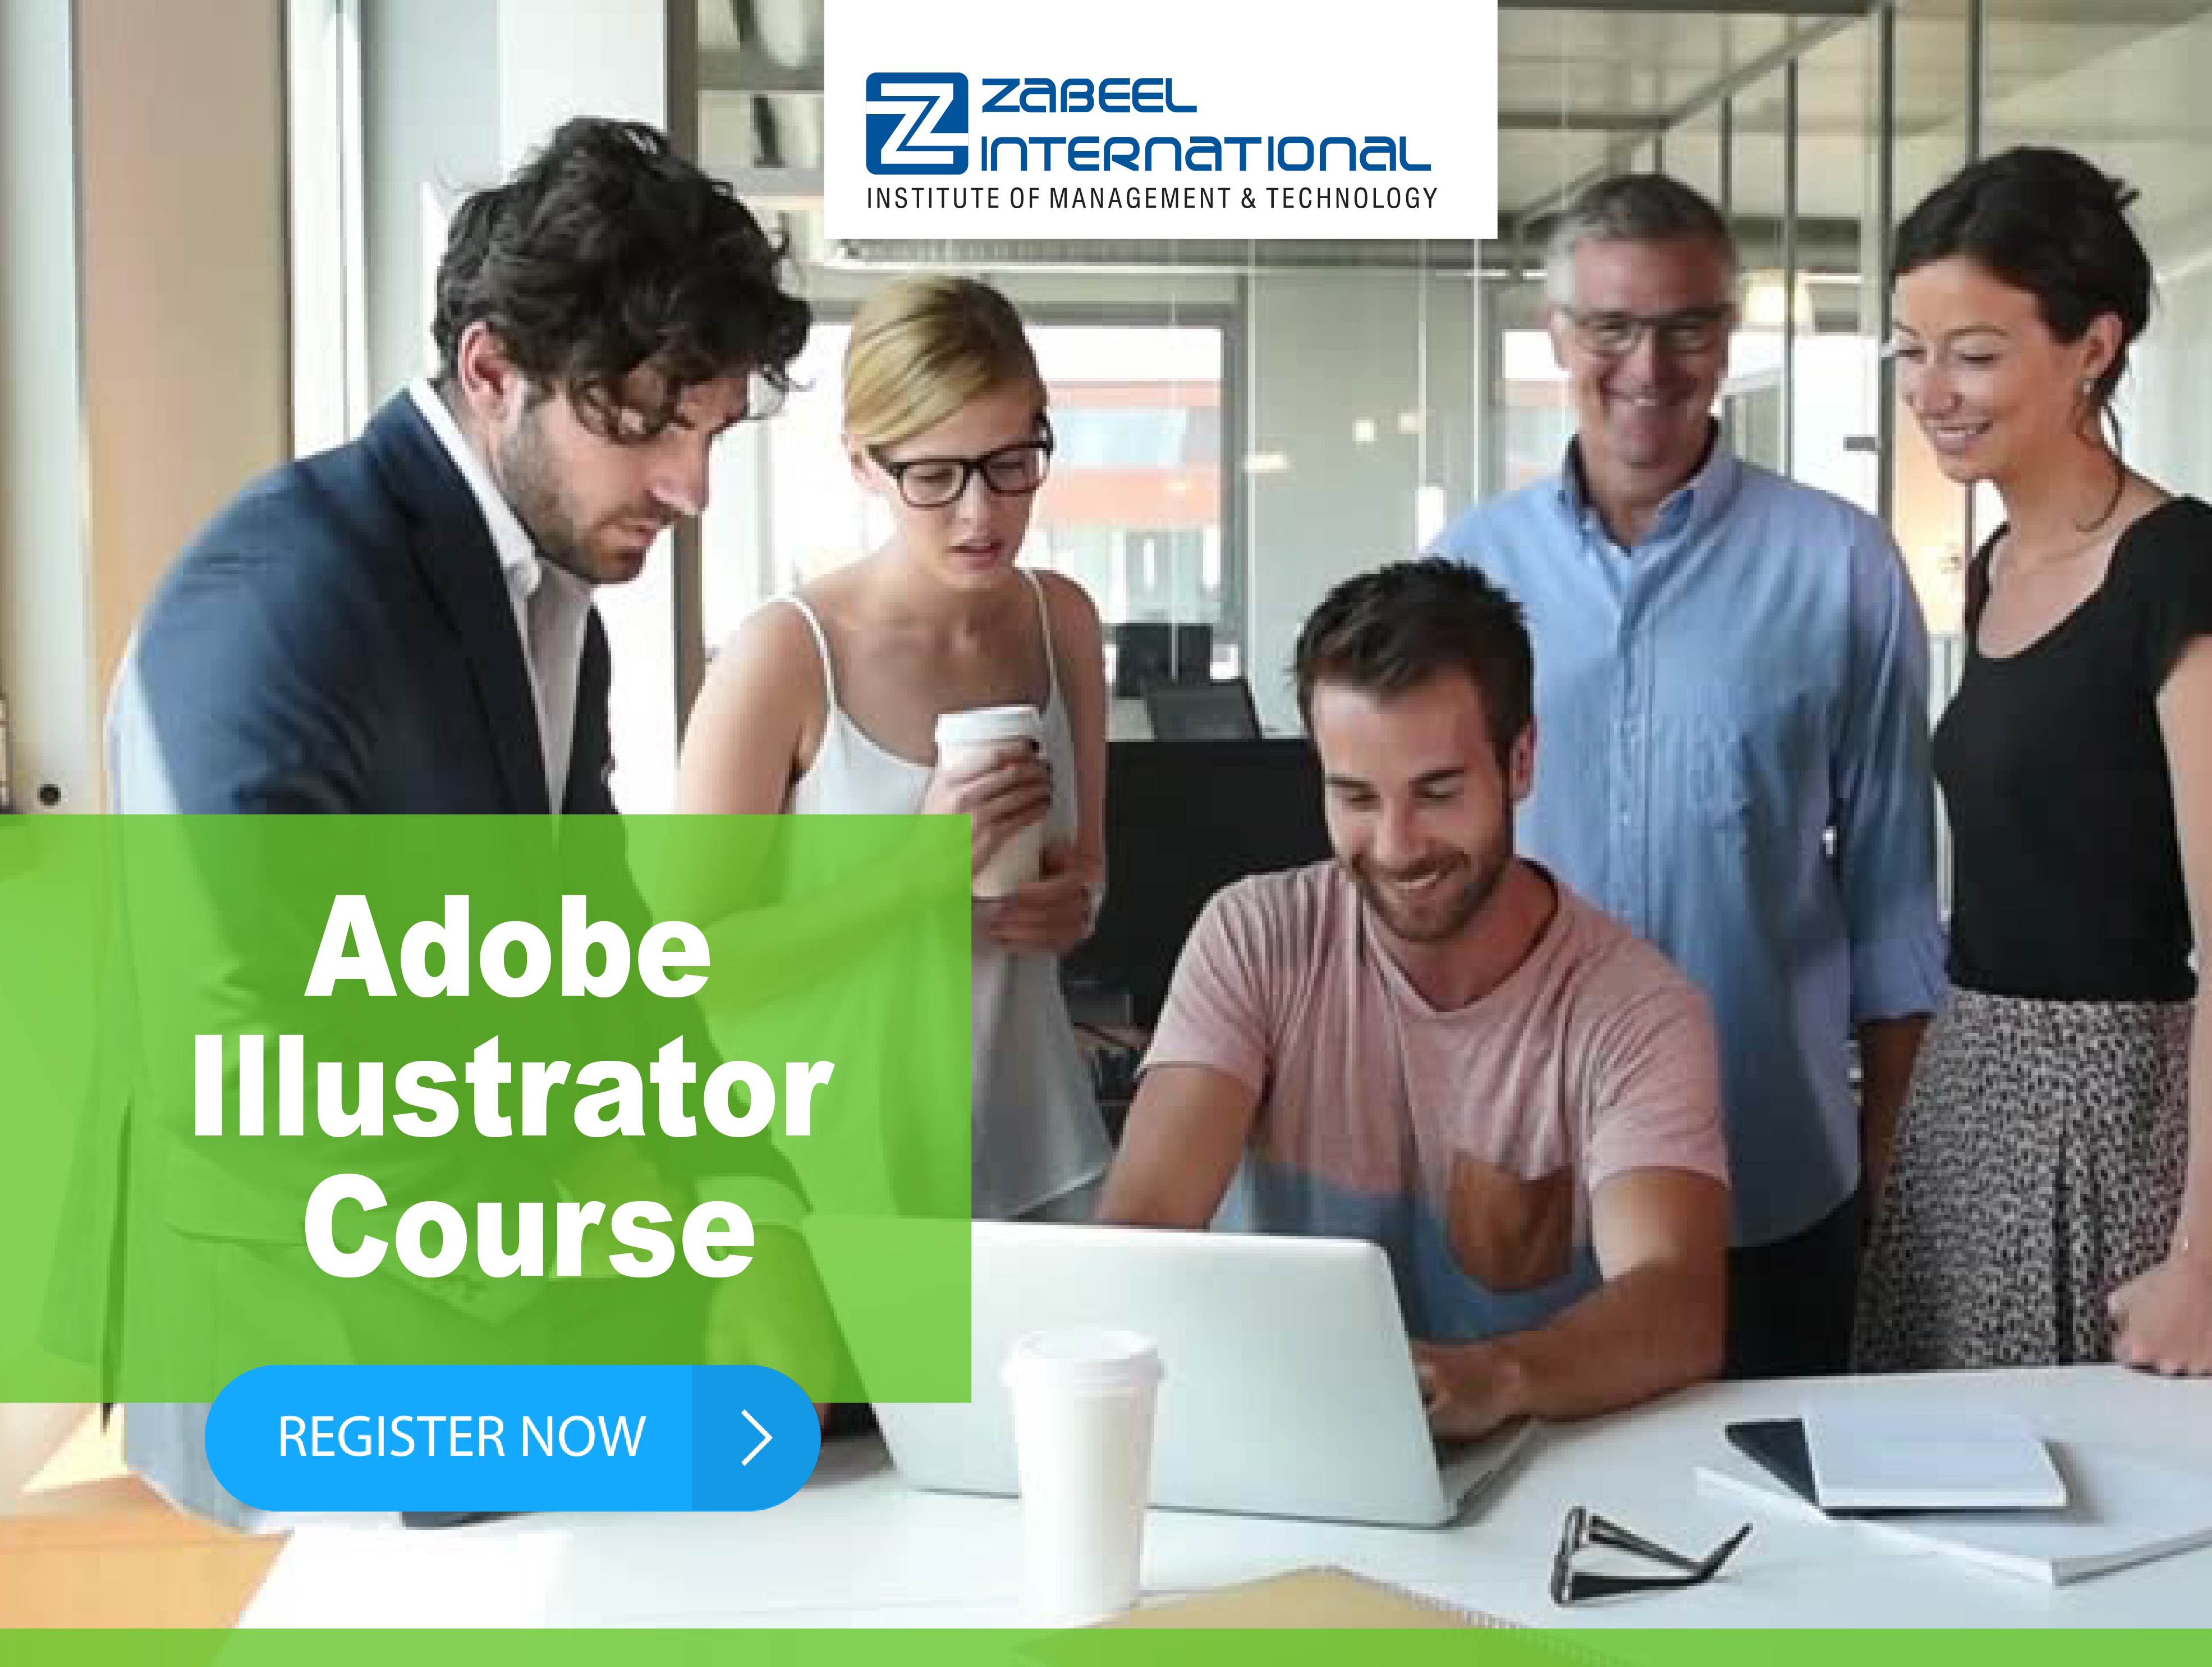 Adobe Illustrator Course, Dubai, United Arab Emirates